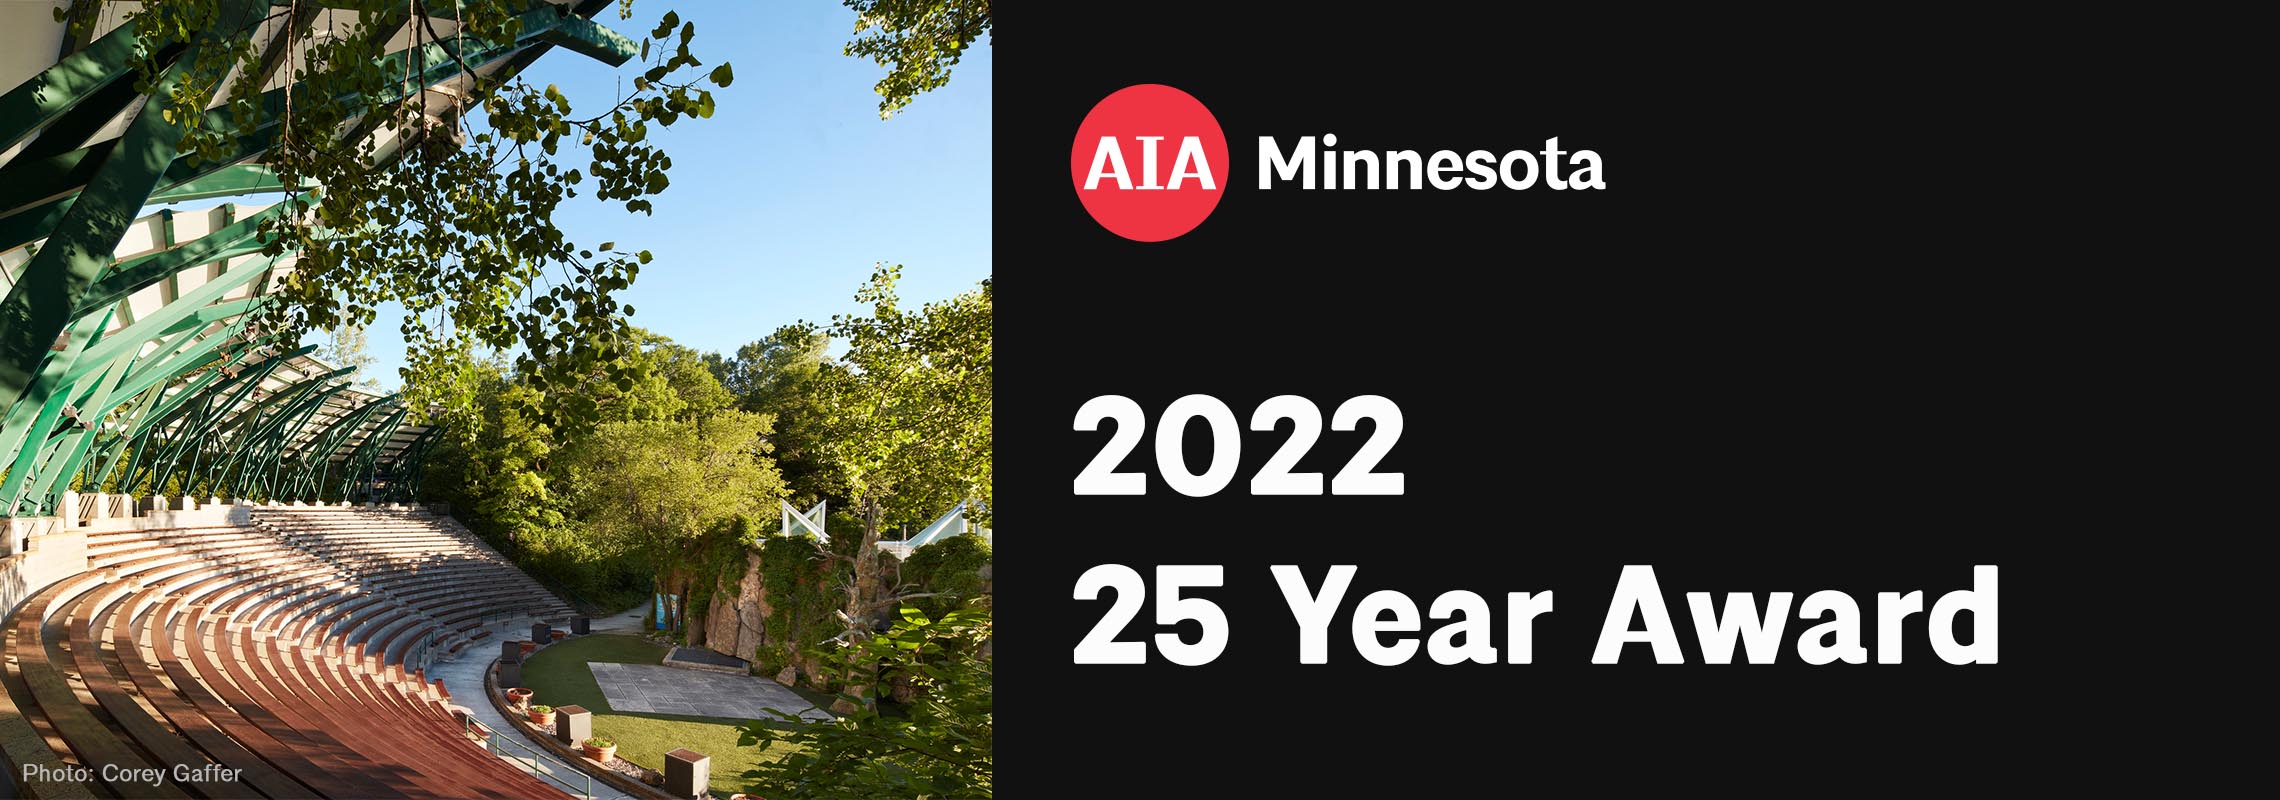 Weesner Family Amphitheater Receives AIA Minnesota 25 Year Award